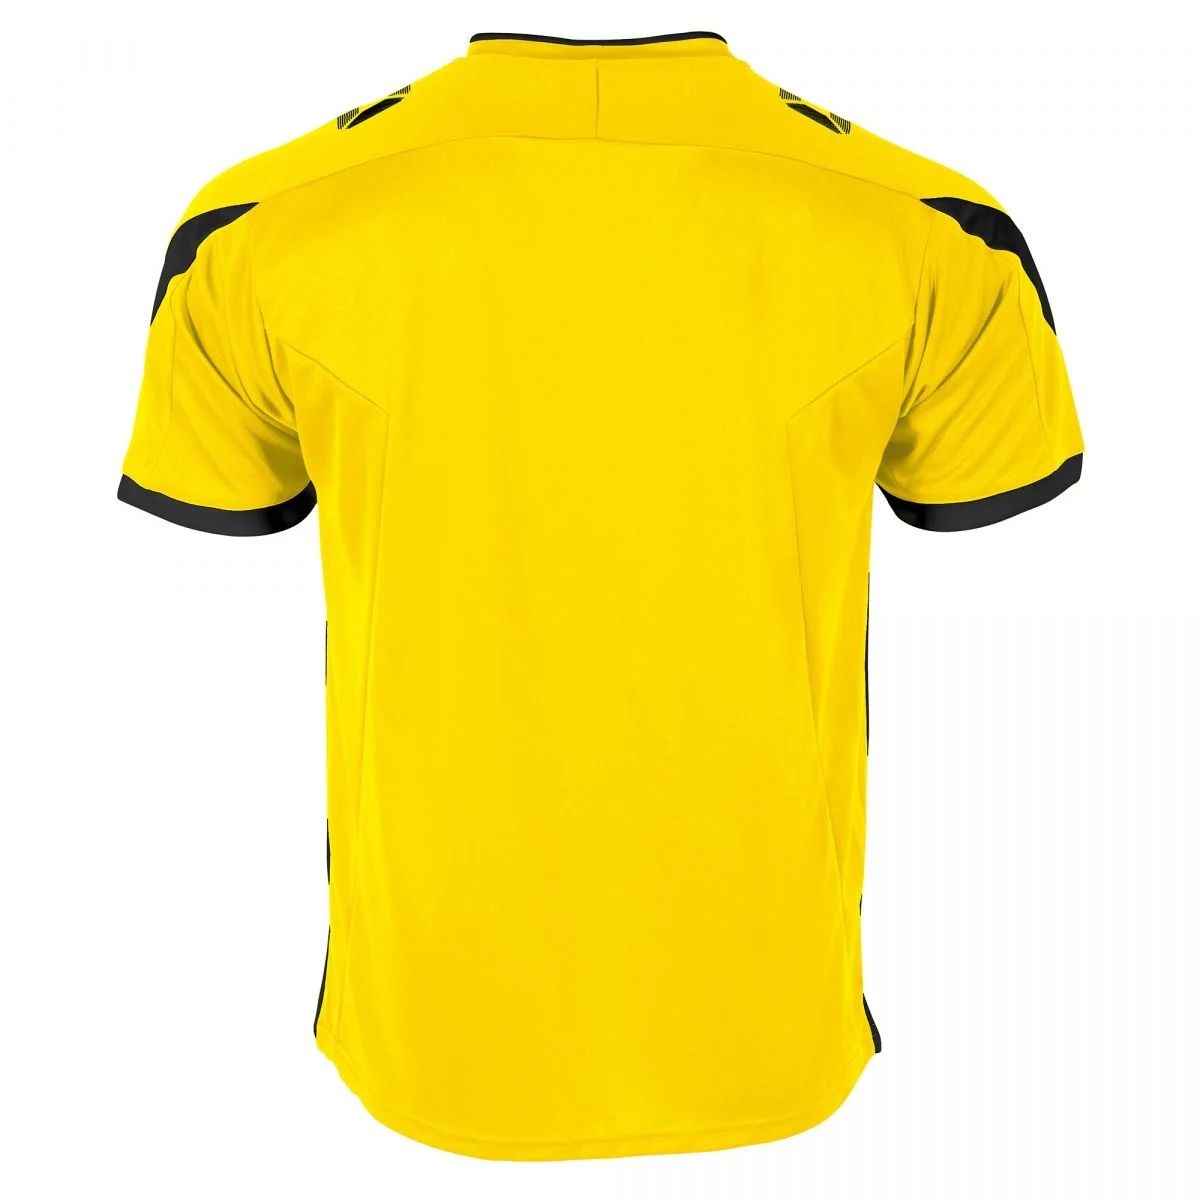 Stanno - Drive Shirt- Yellow & Black